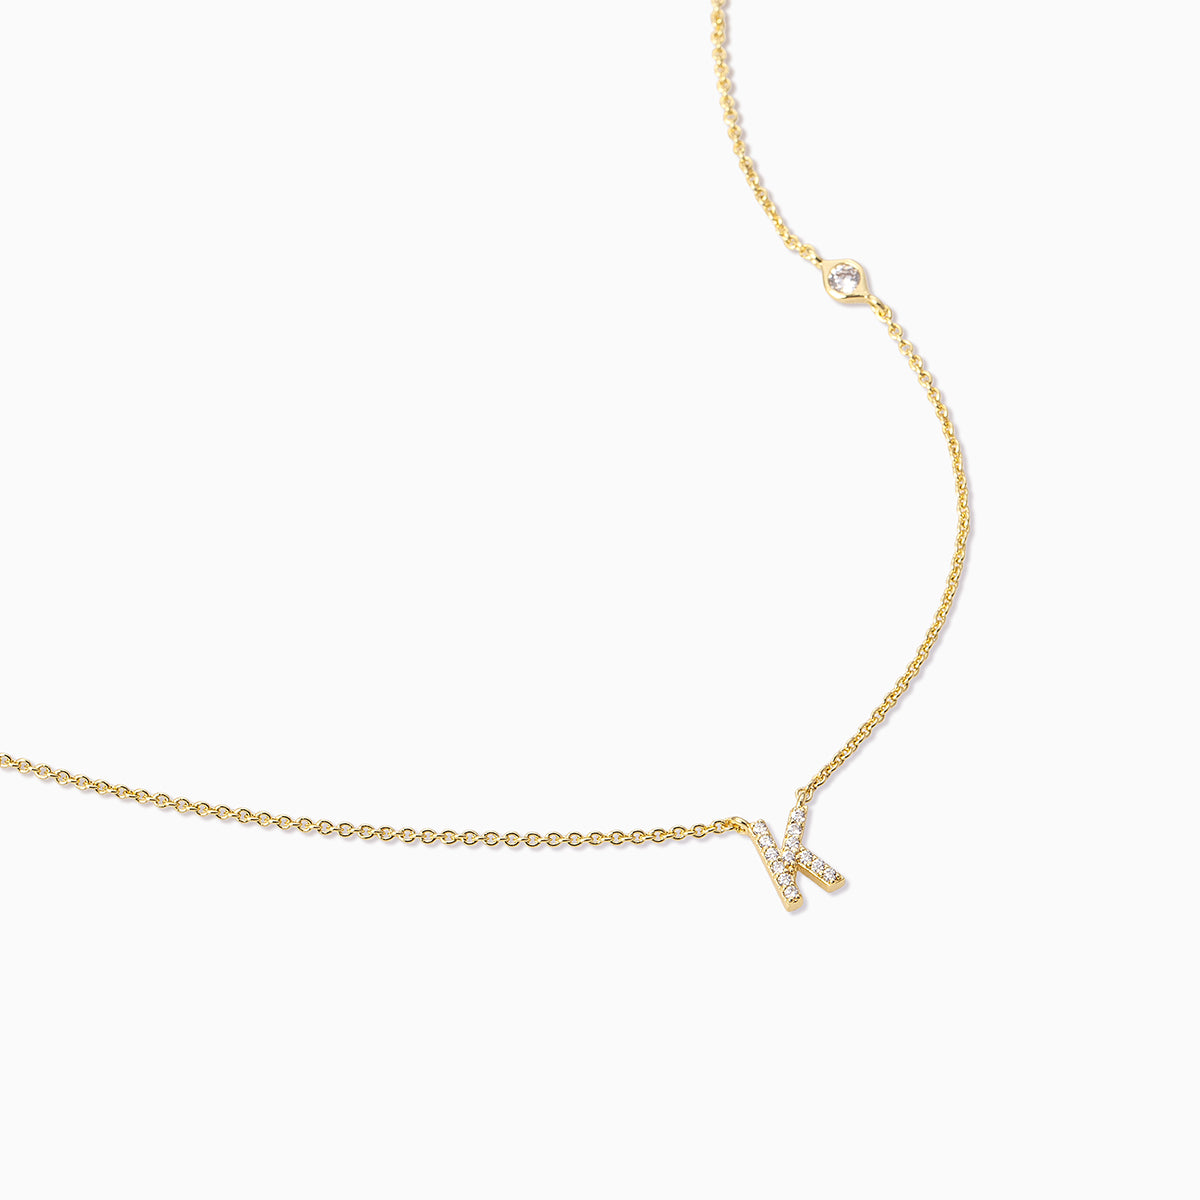 Pavé Initial Necklace | Gold | Product Detail Image | Uncommon James